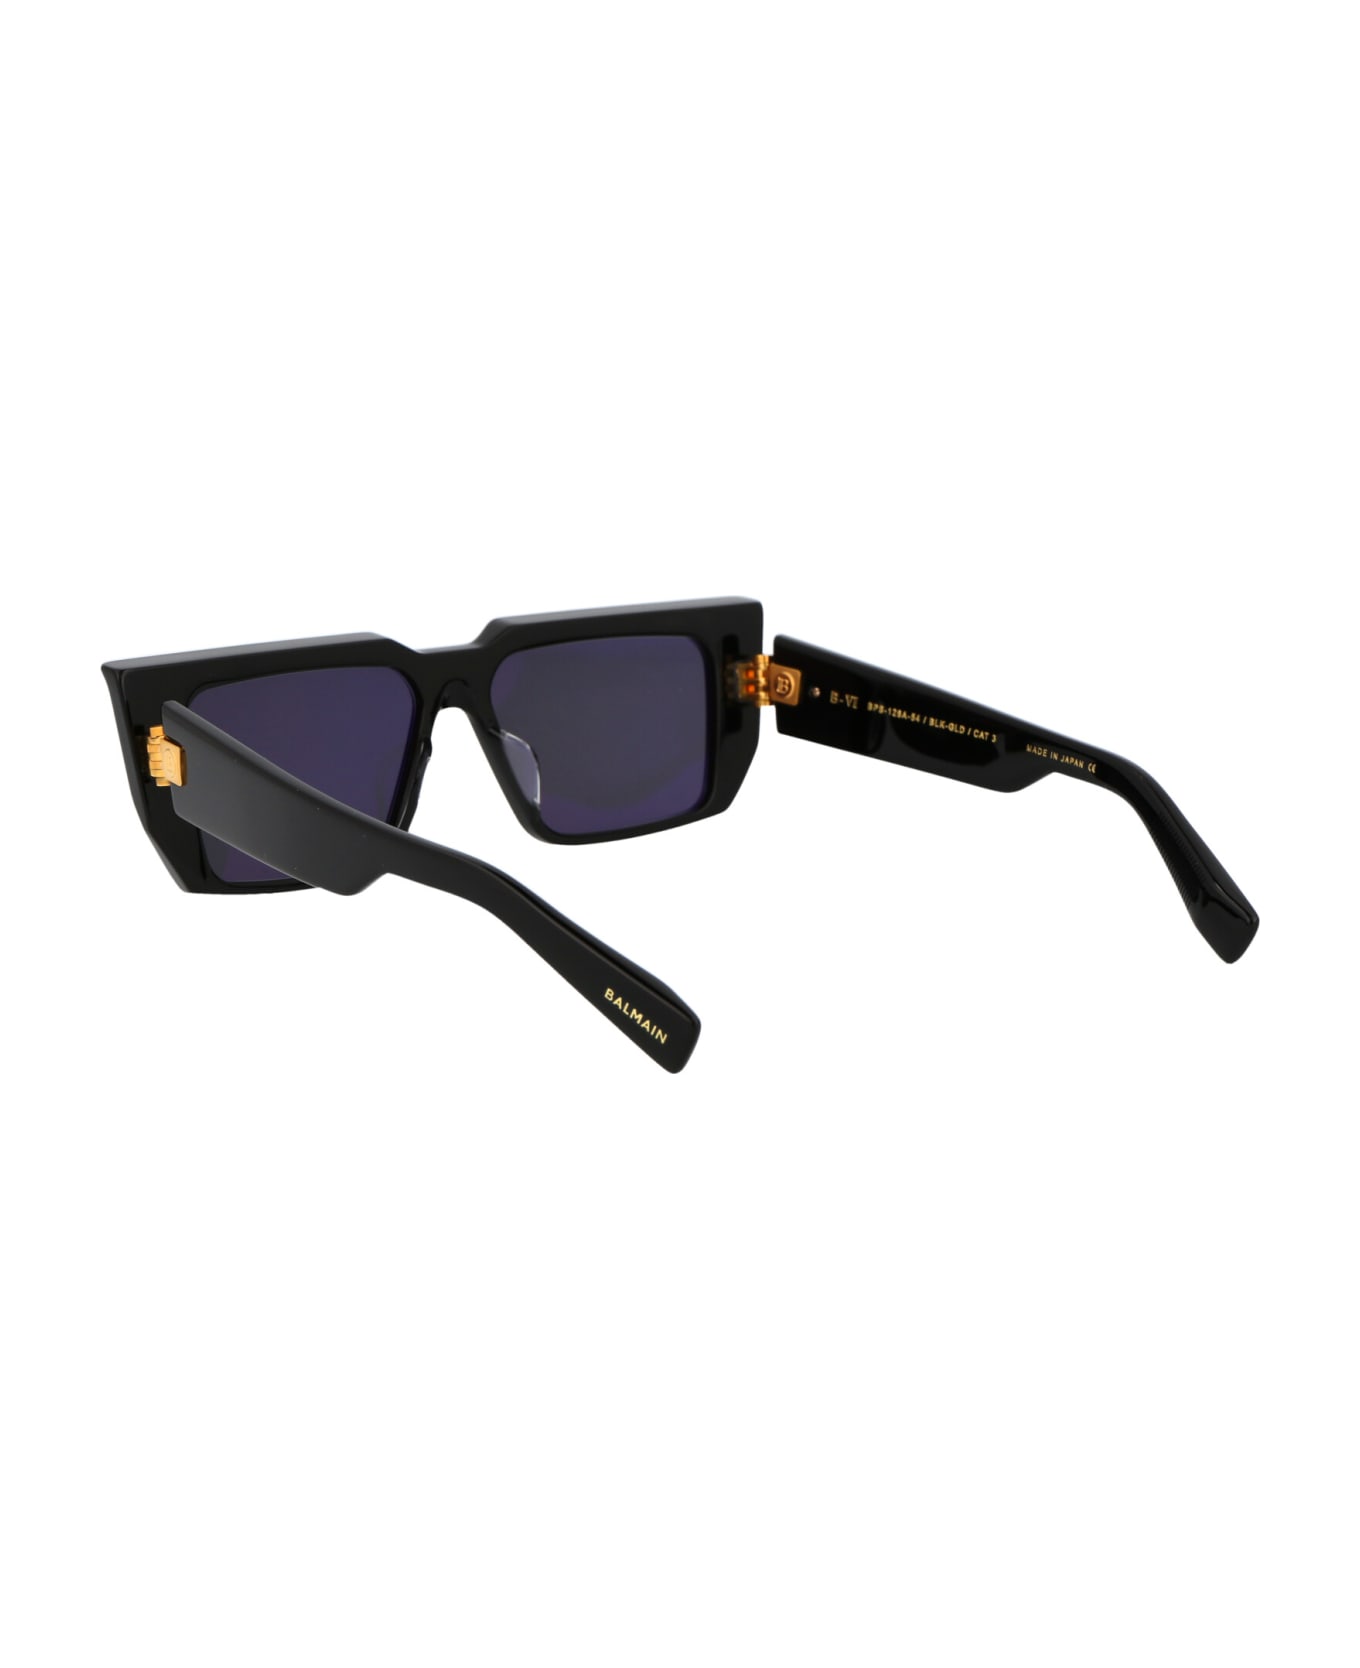 Balmain B - Vi Sunglasses - BLACK GOLD W/ DARK GREY サングラス